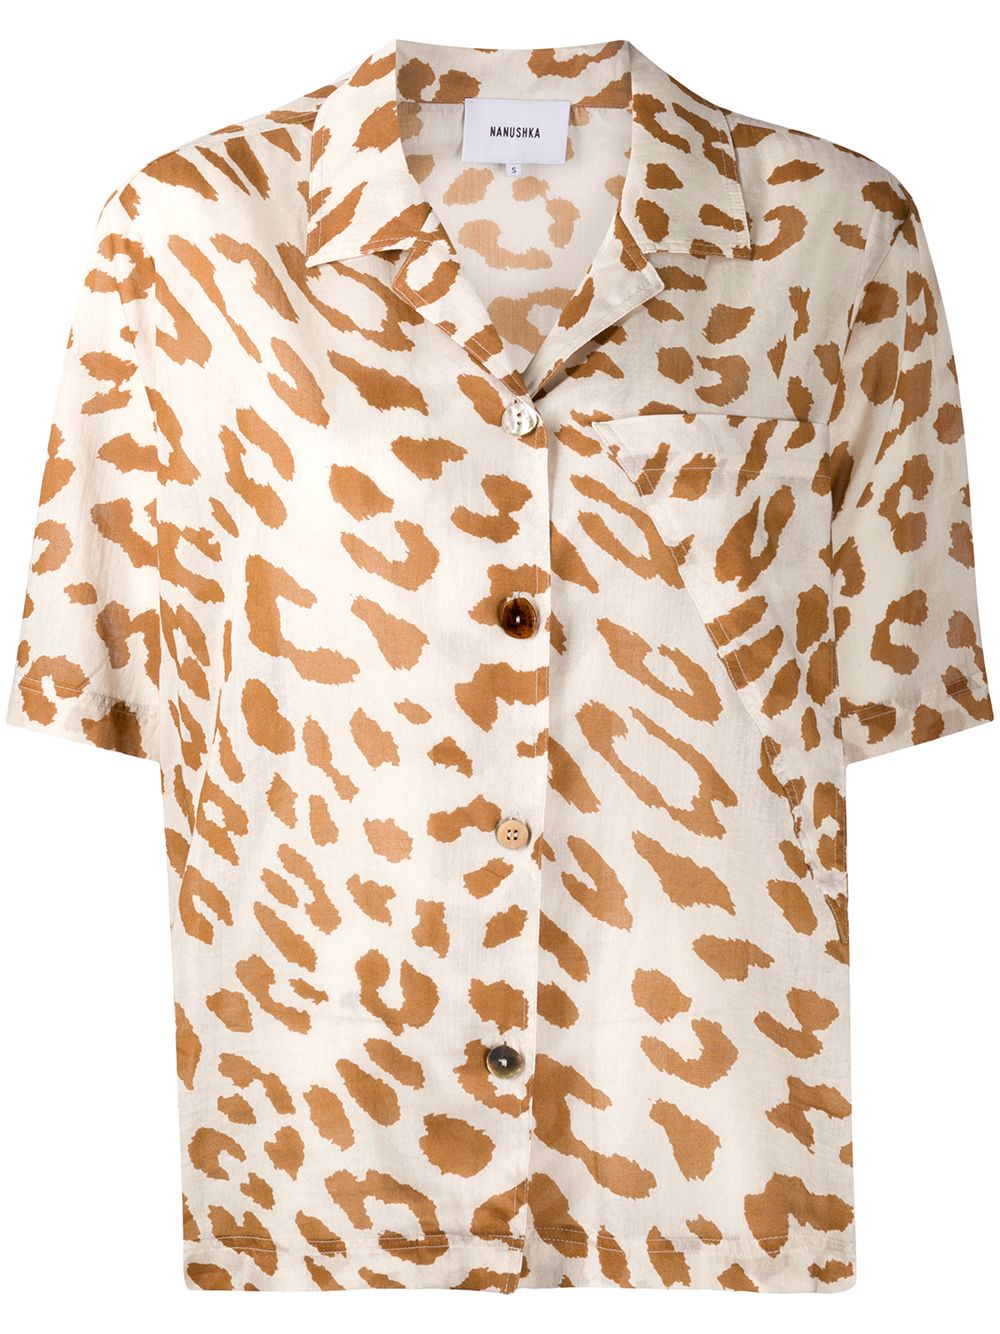 фото Nanushka рубашка с леопардовым принтом